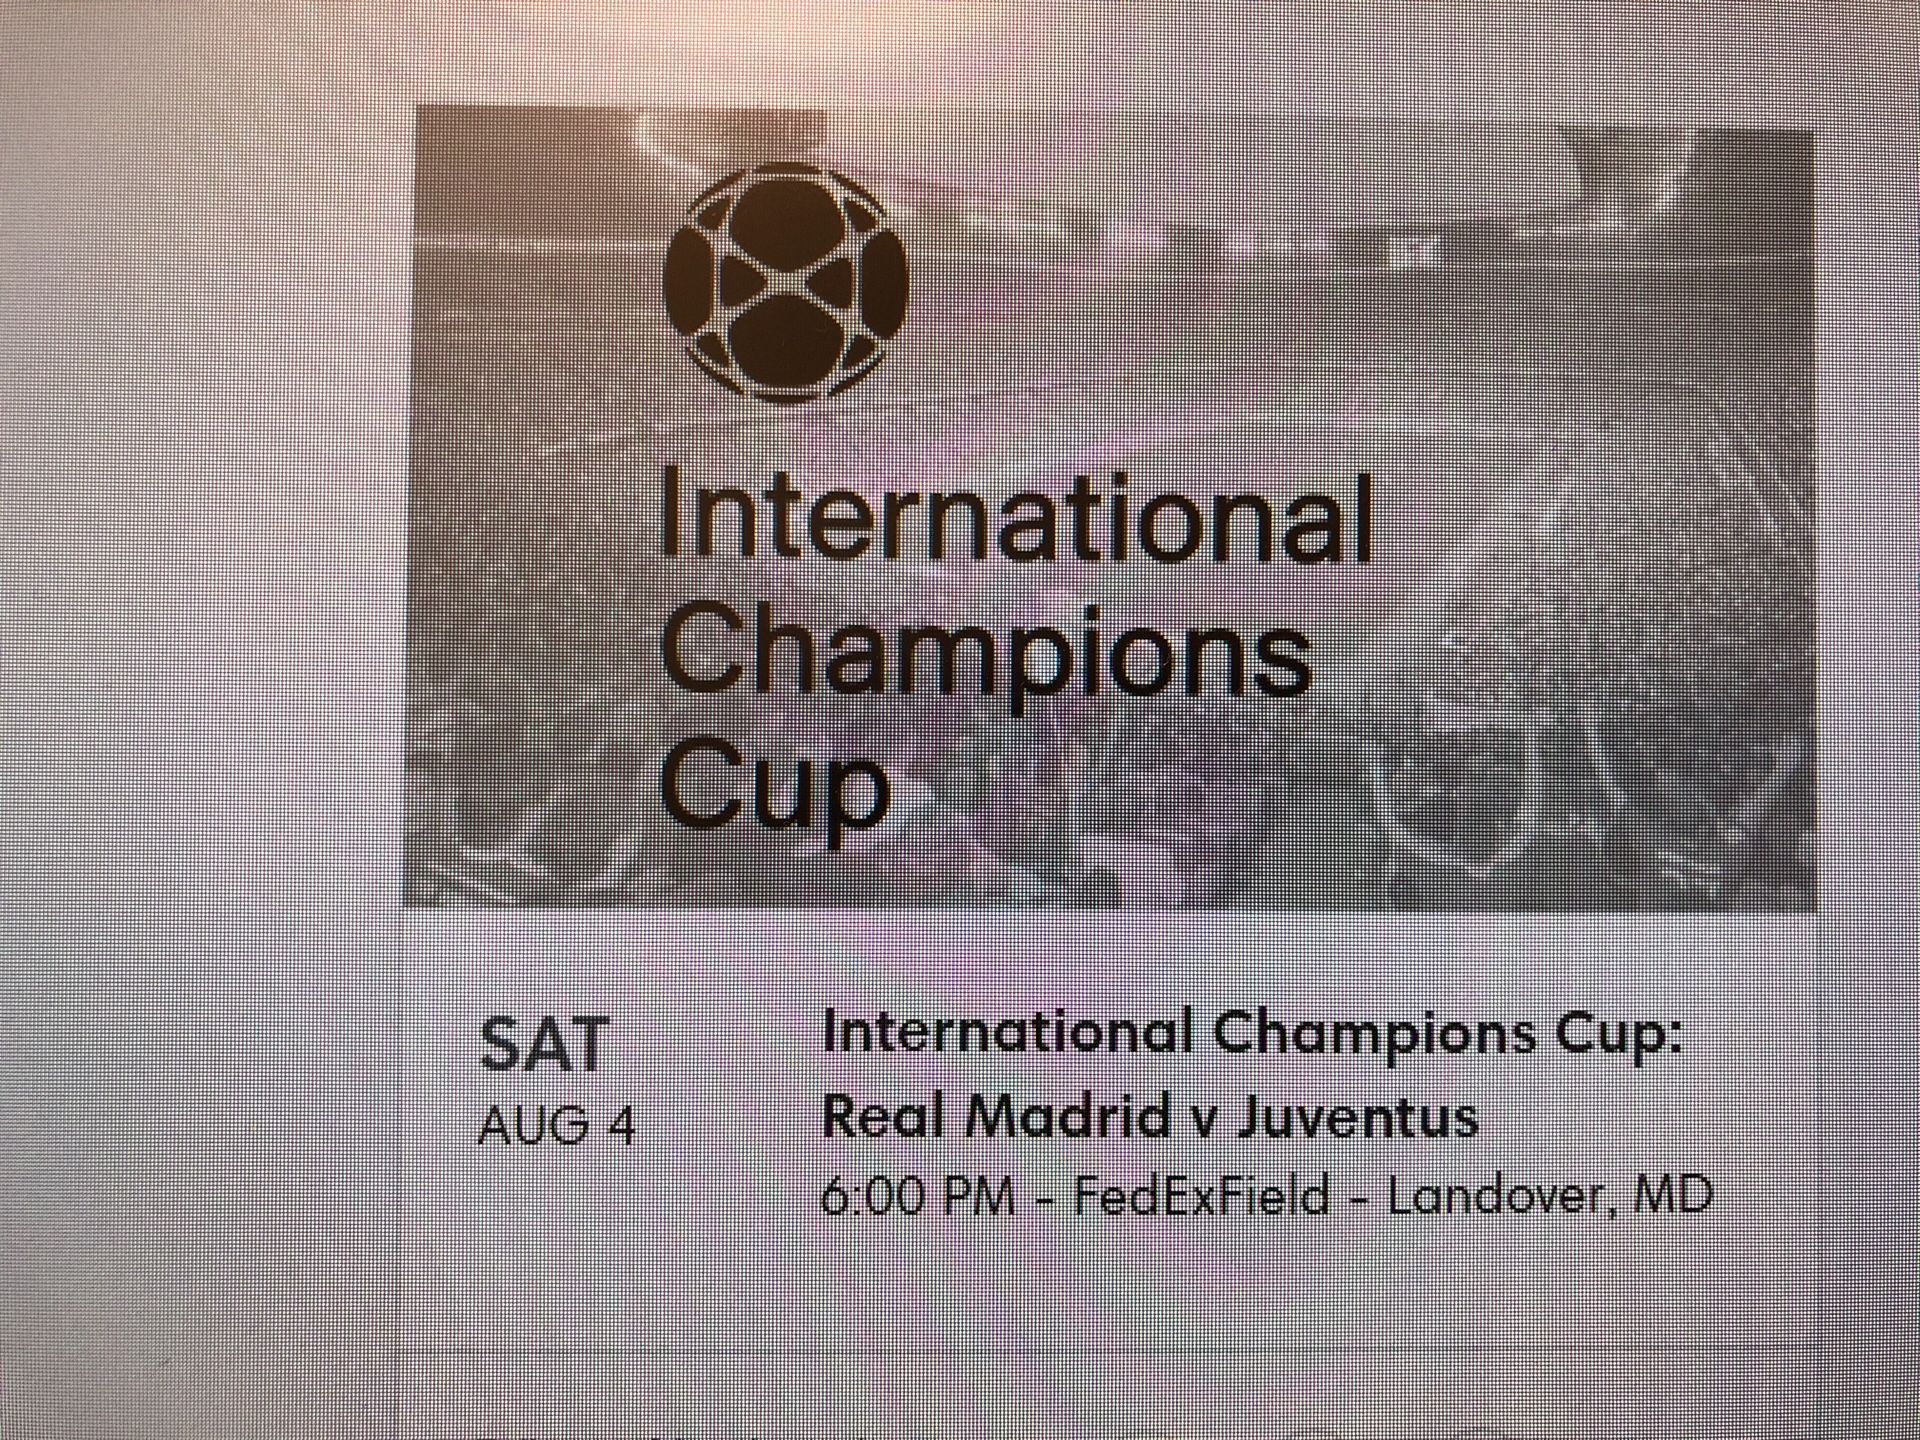 International champions Cup: Real Madrid v Juventus